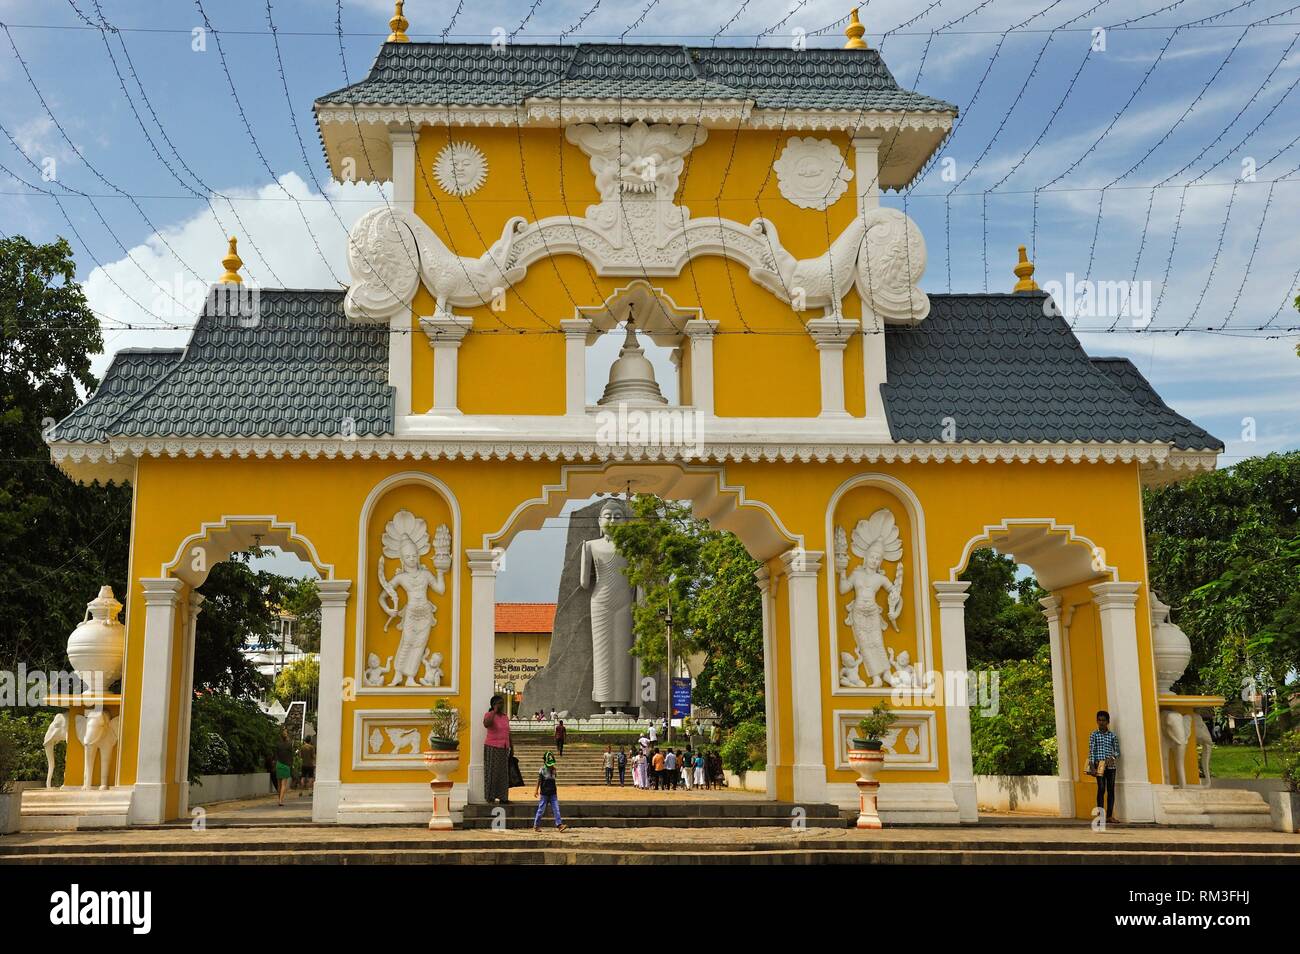 Ingresso di Uthpalawanna Sri Vishnu Devalaya tempio, entrambi buddisti e indù, luogo di culto, Dondra, South Coast, Sri Lanka, Indiana Foto Stock